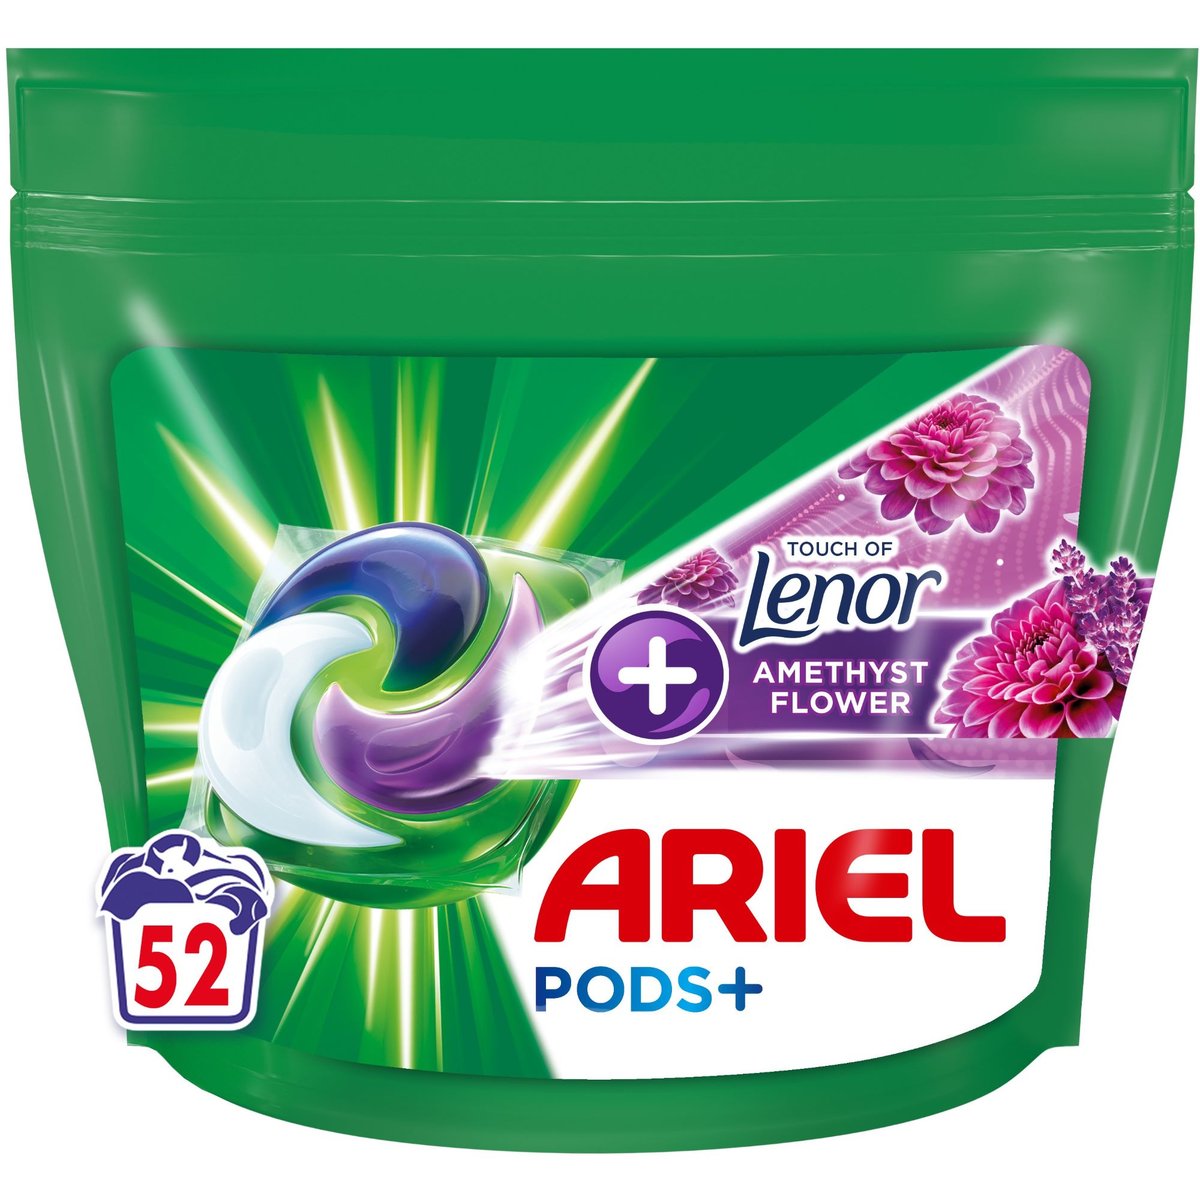 Ariel+ Touch of Lenor Amethyst Flower gelové prací kapsle